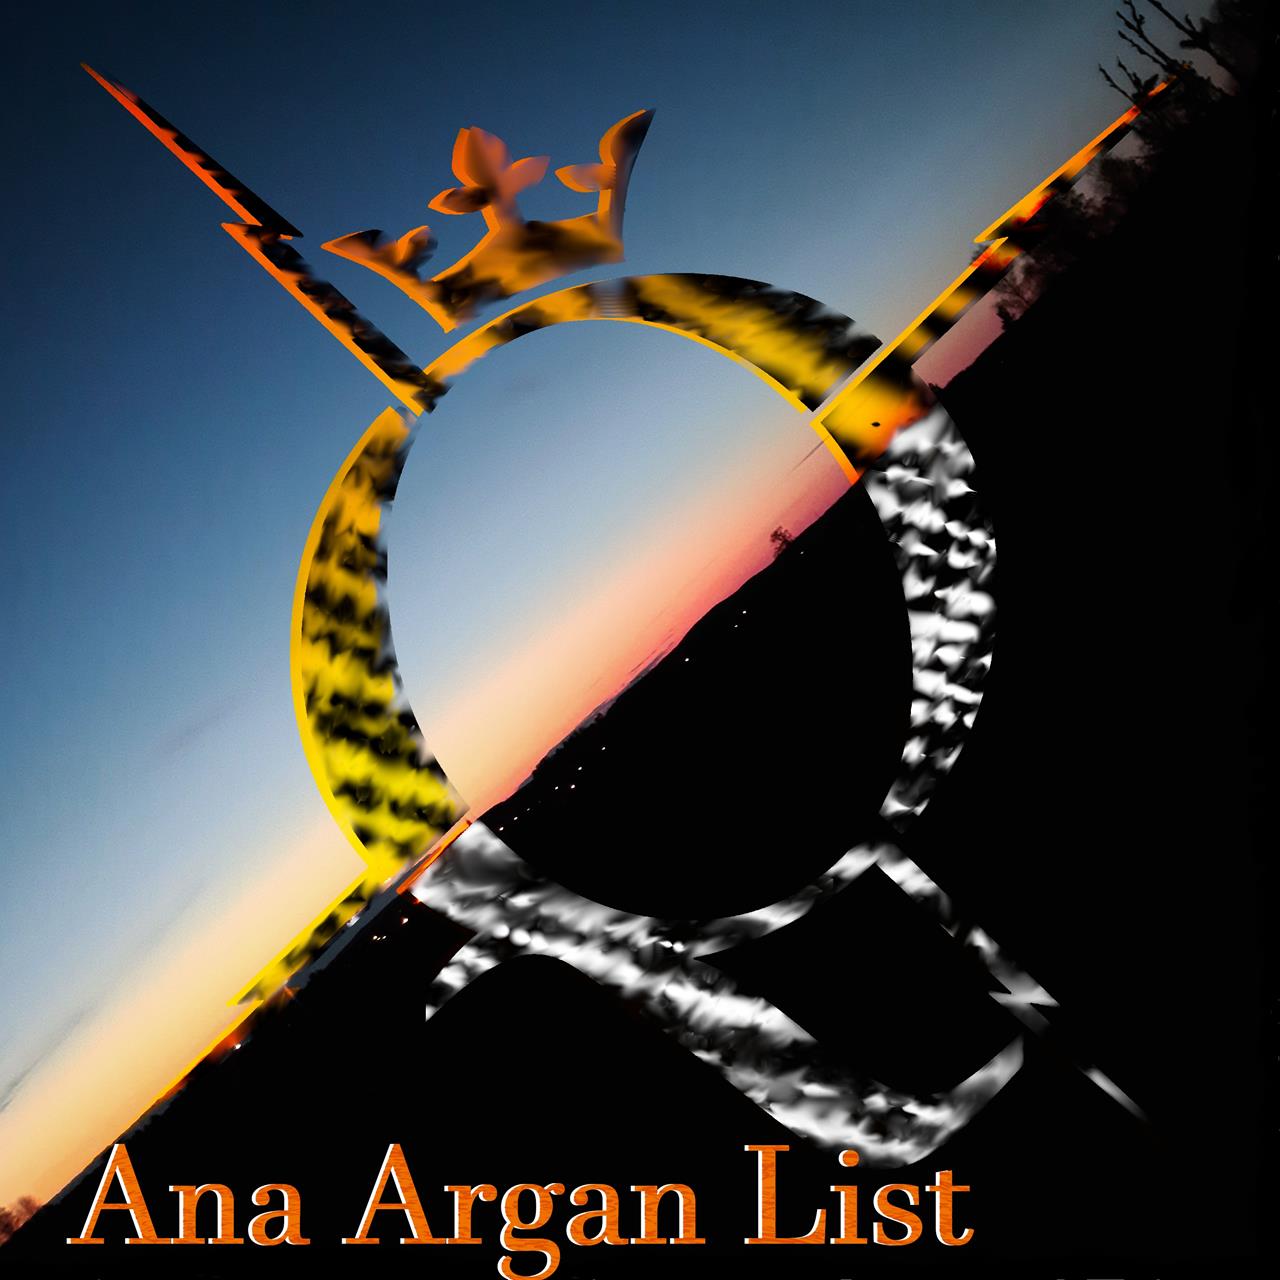 Ana Argan List - cover art